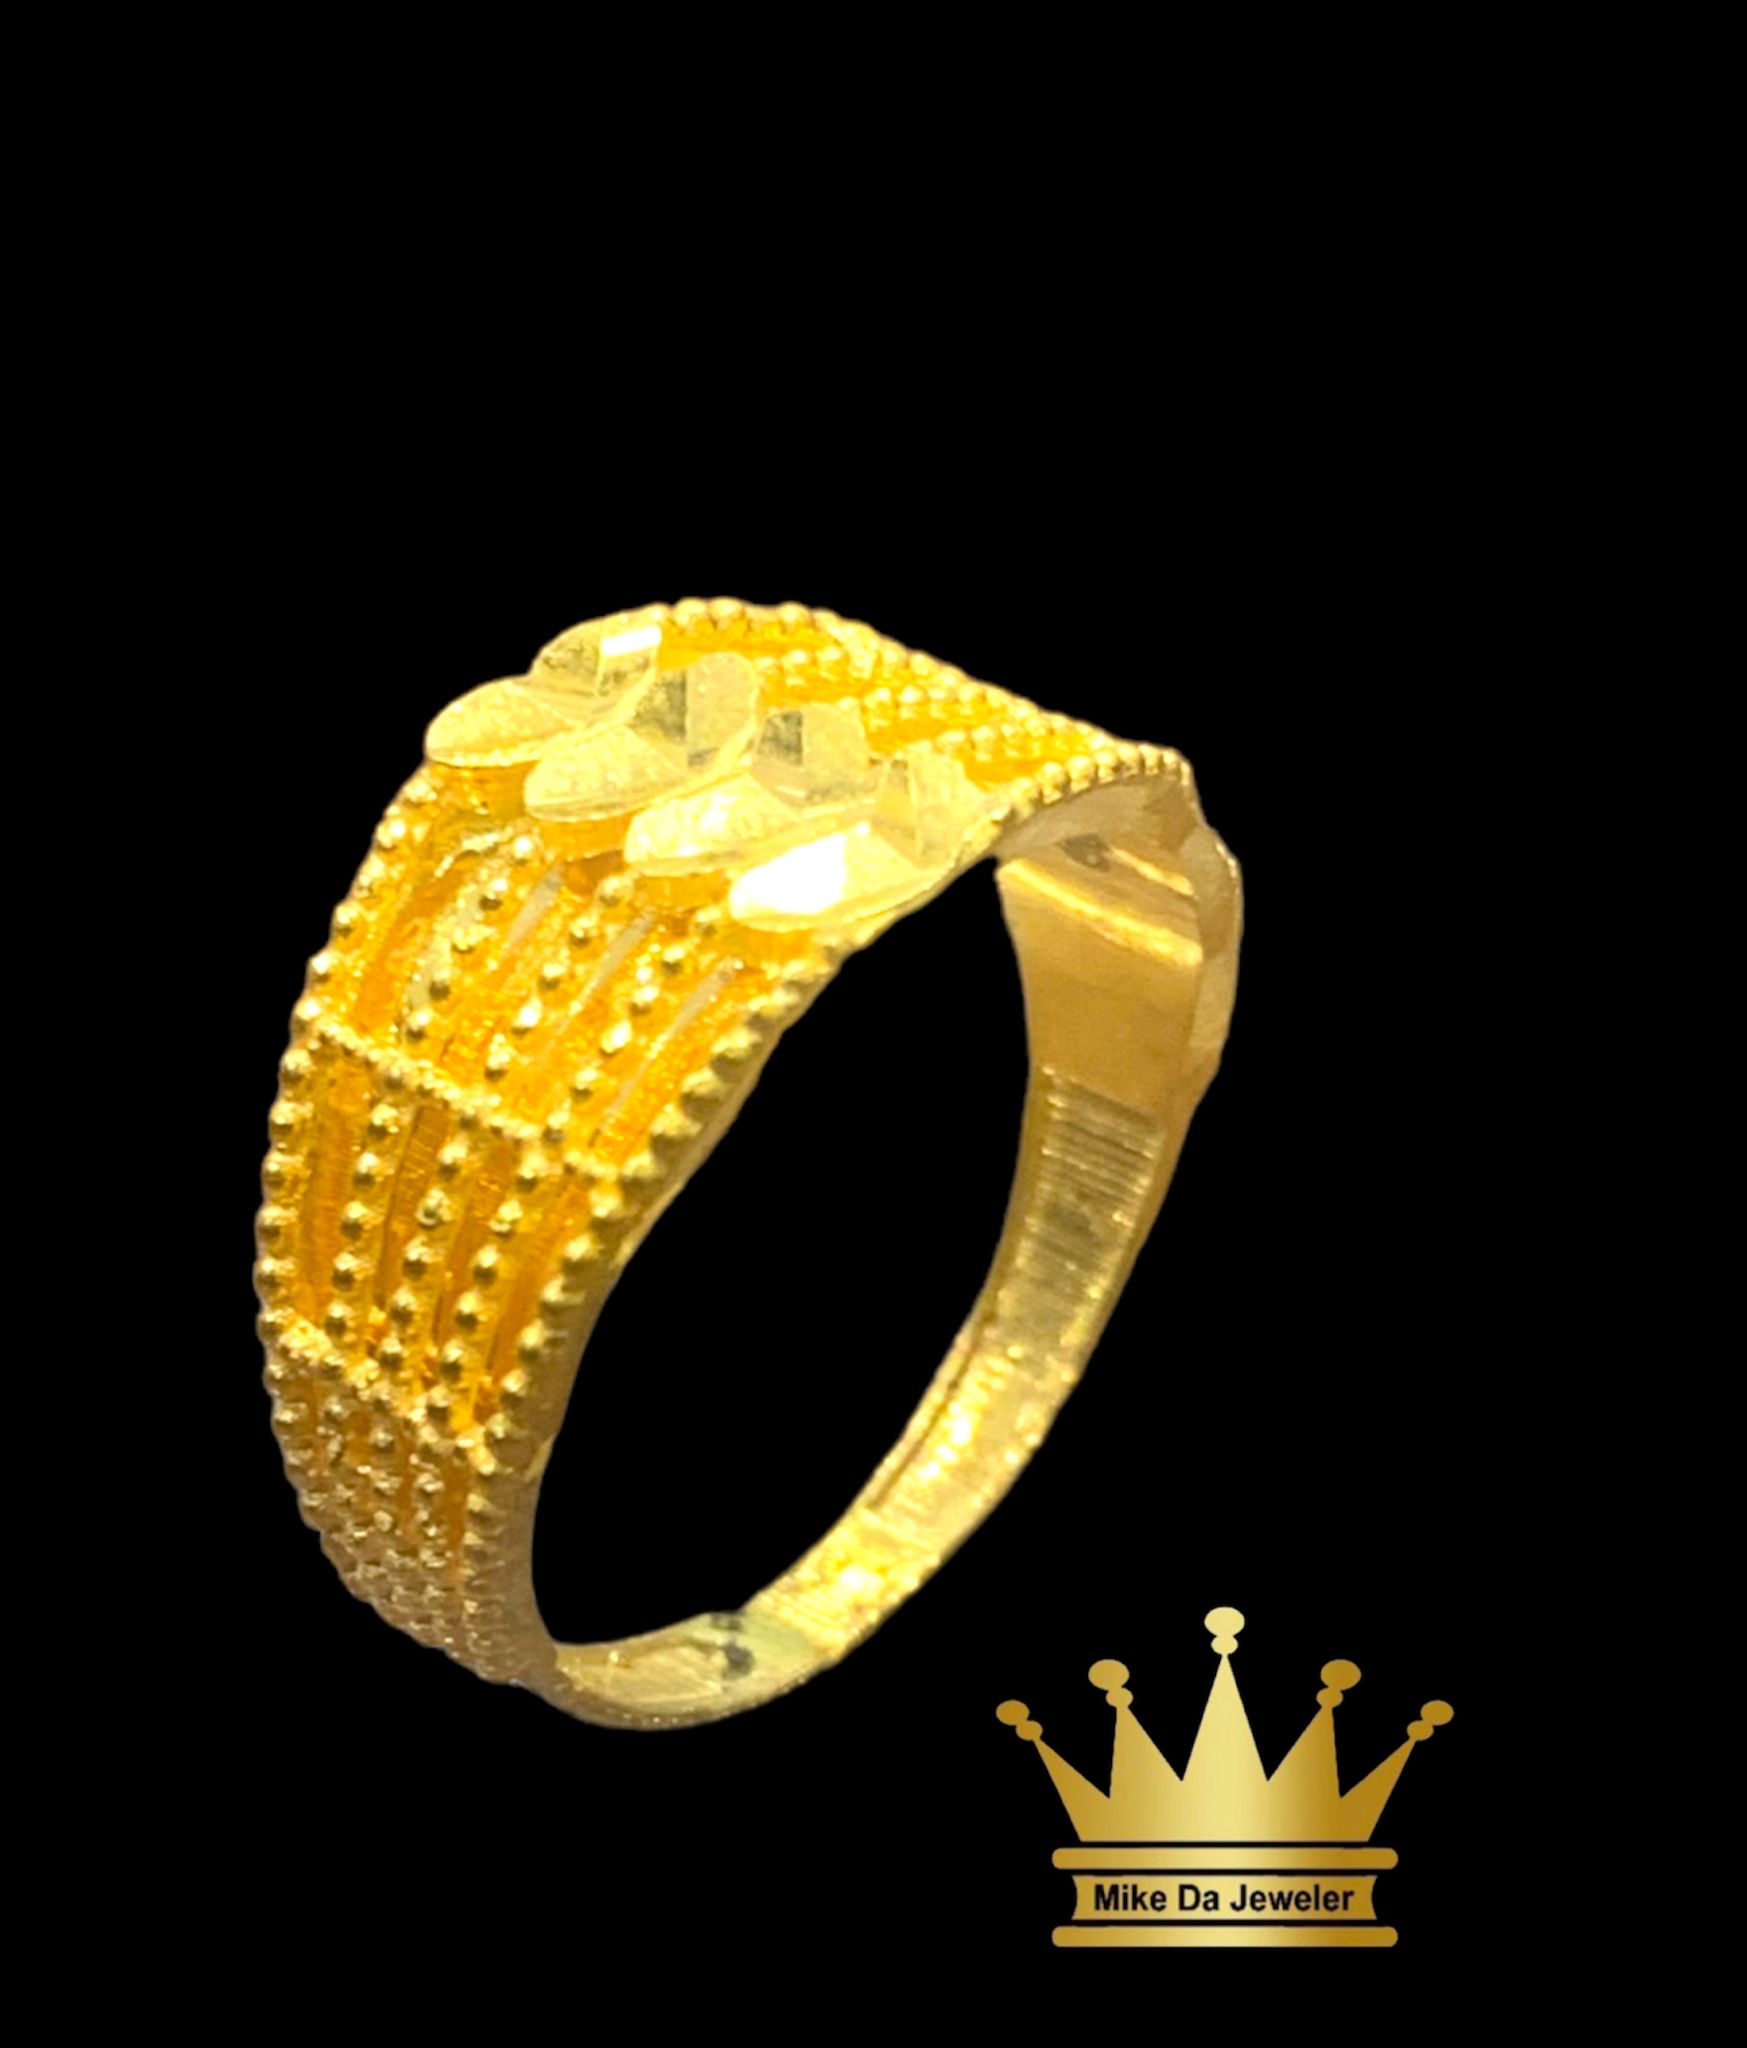 Radhe Imitation Golden A-415 Gold Plating Mudra Men Ring, Weight: 6 Gm  (approx) at Rs 2300/piece in Rajkot